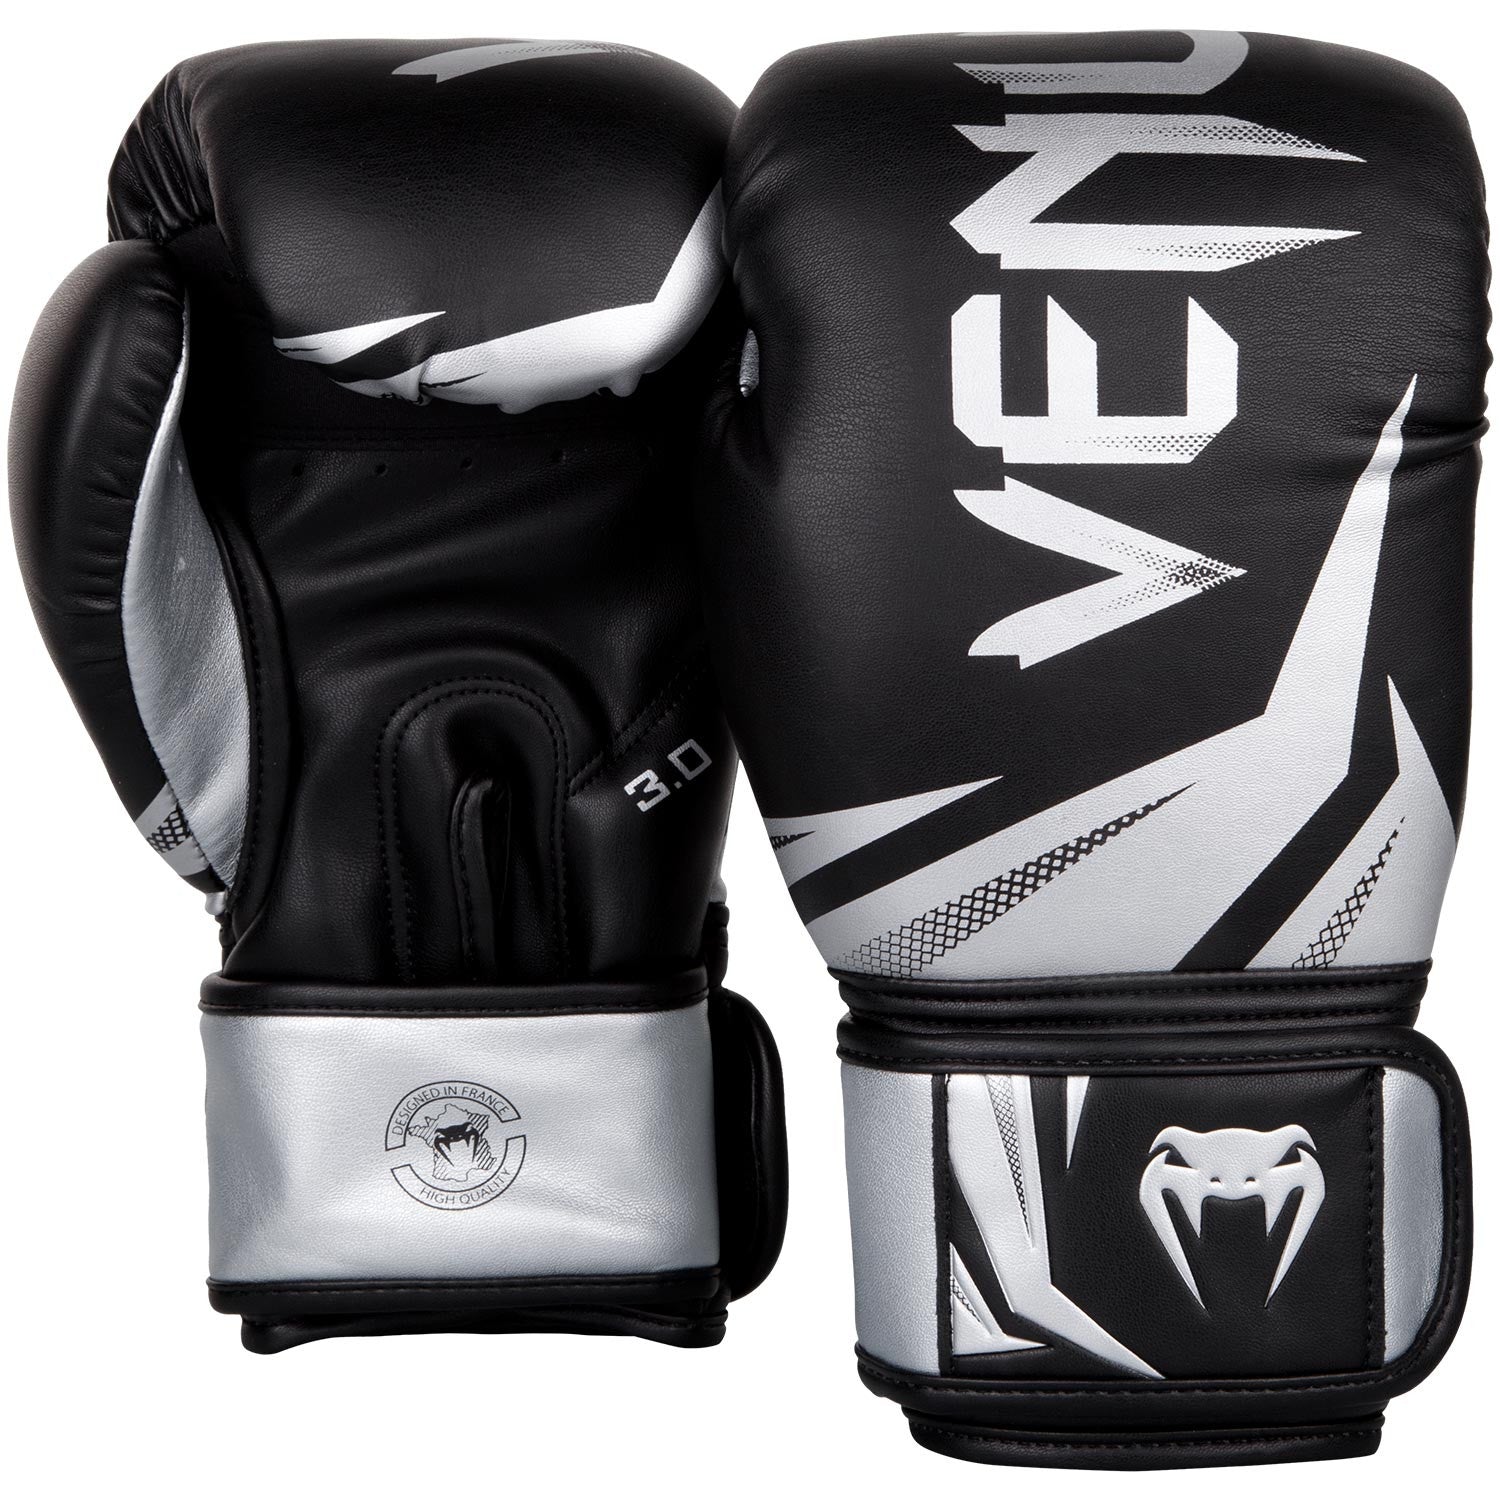 Venum Challenger 3.0 Boxing Gloves - Black/Silver